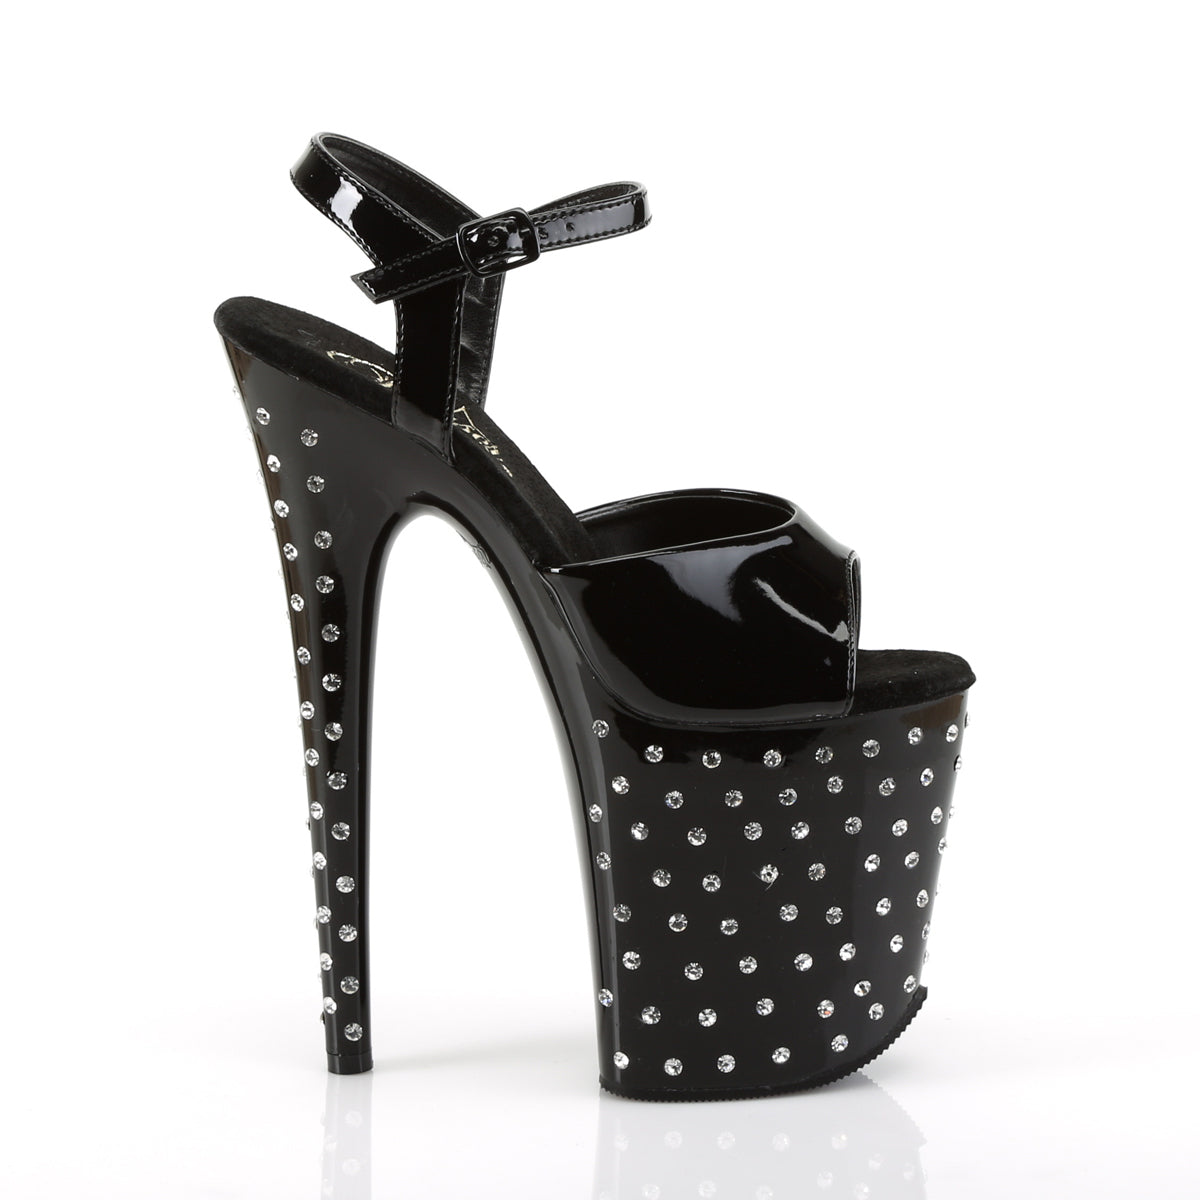 STARDUST-809 Black Patent Platform Sandal Pleaser